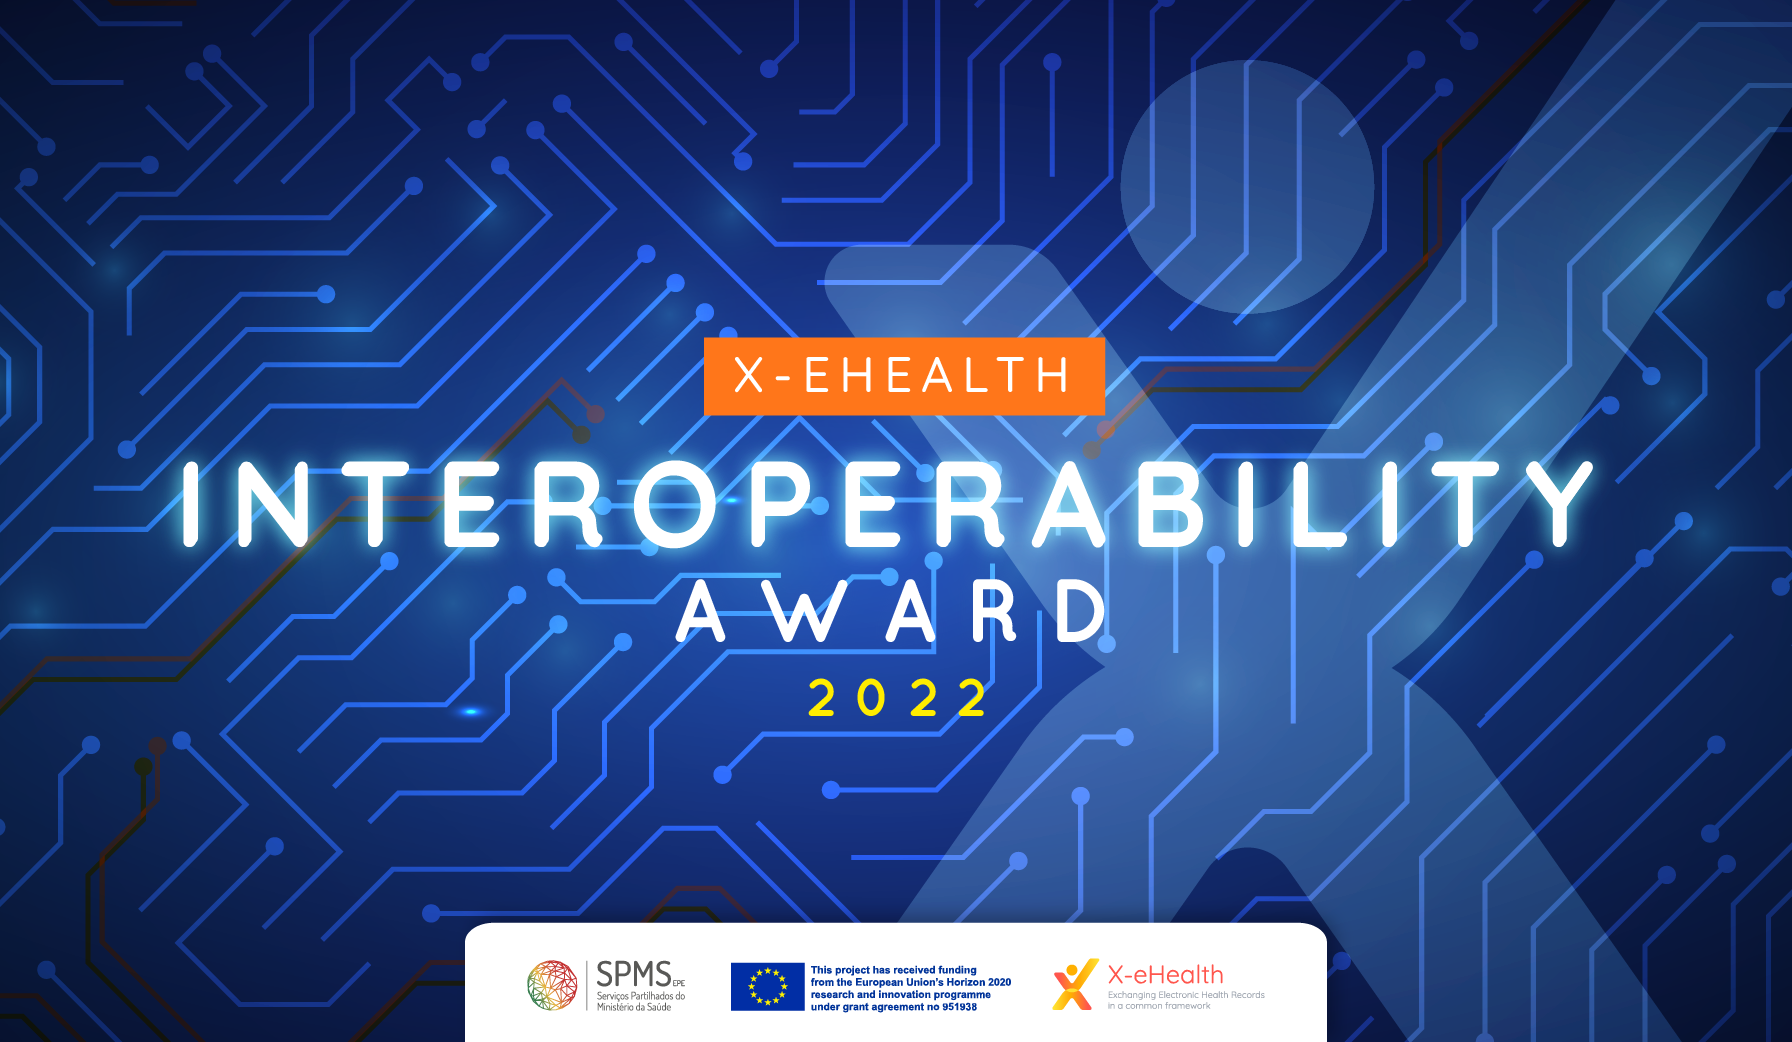 X-eHealth Interoperability Award 2022